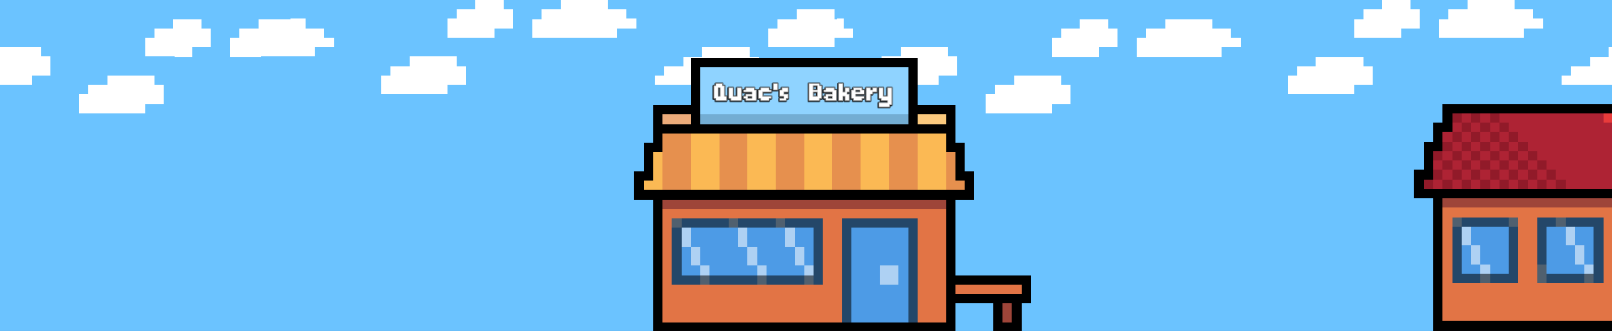 Quac's Bakefull Delivery